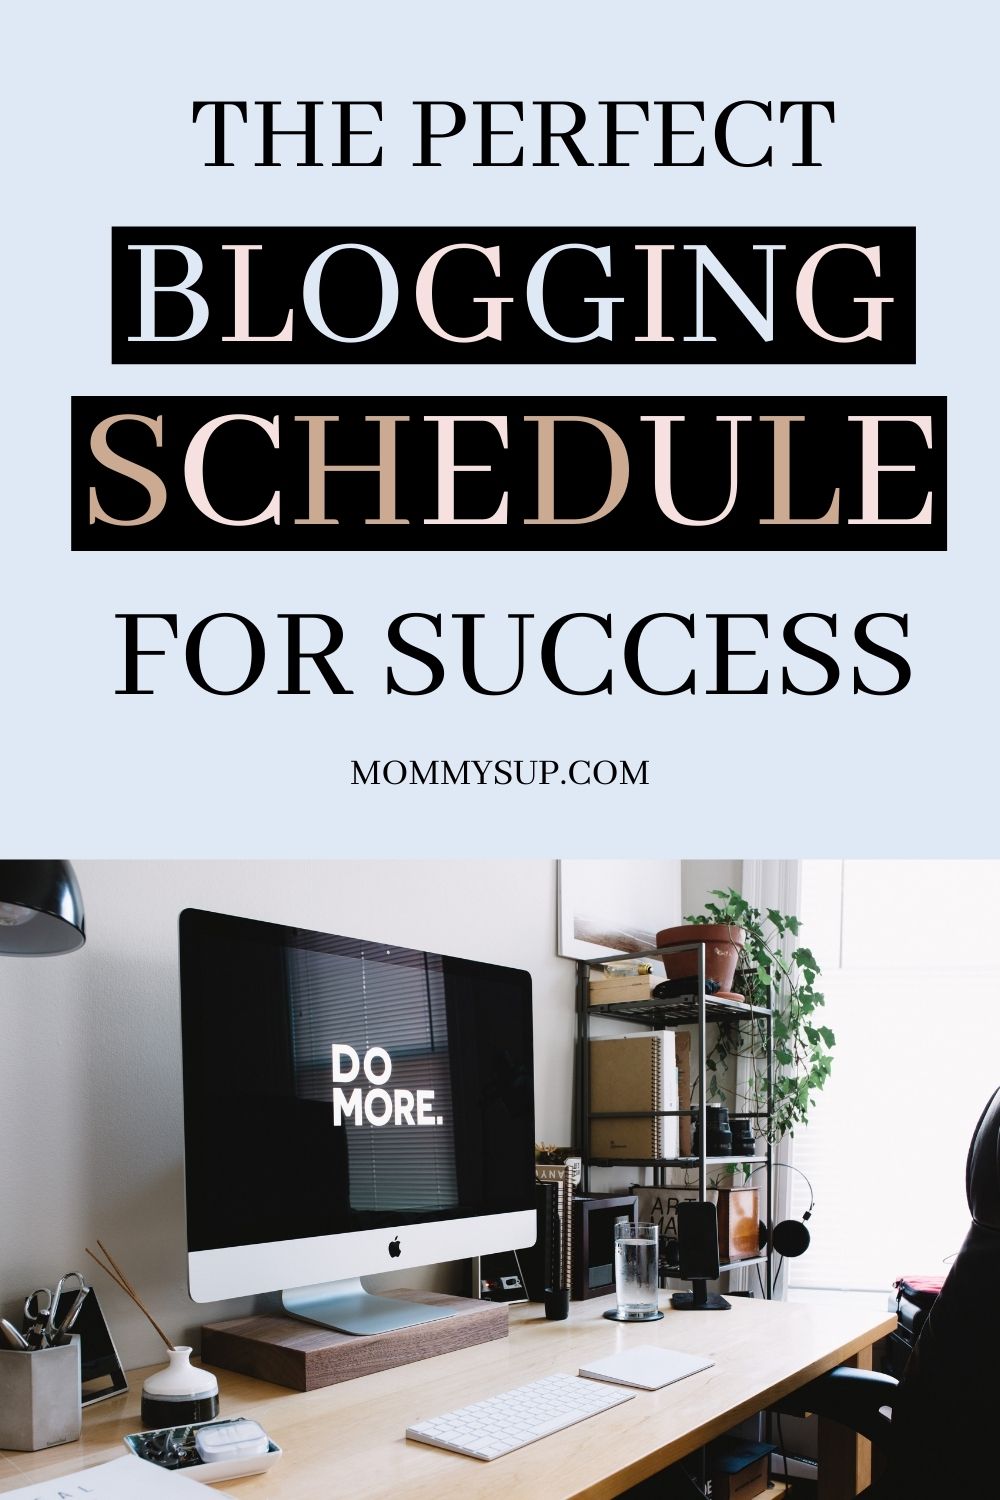 Blogging schedule for success